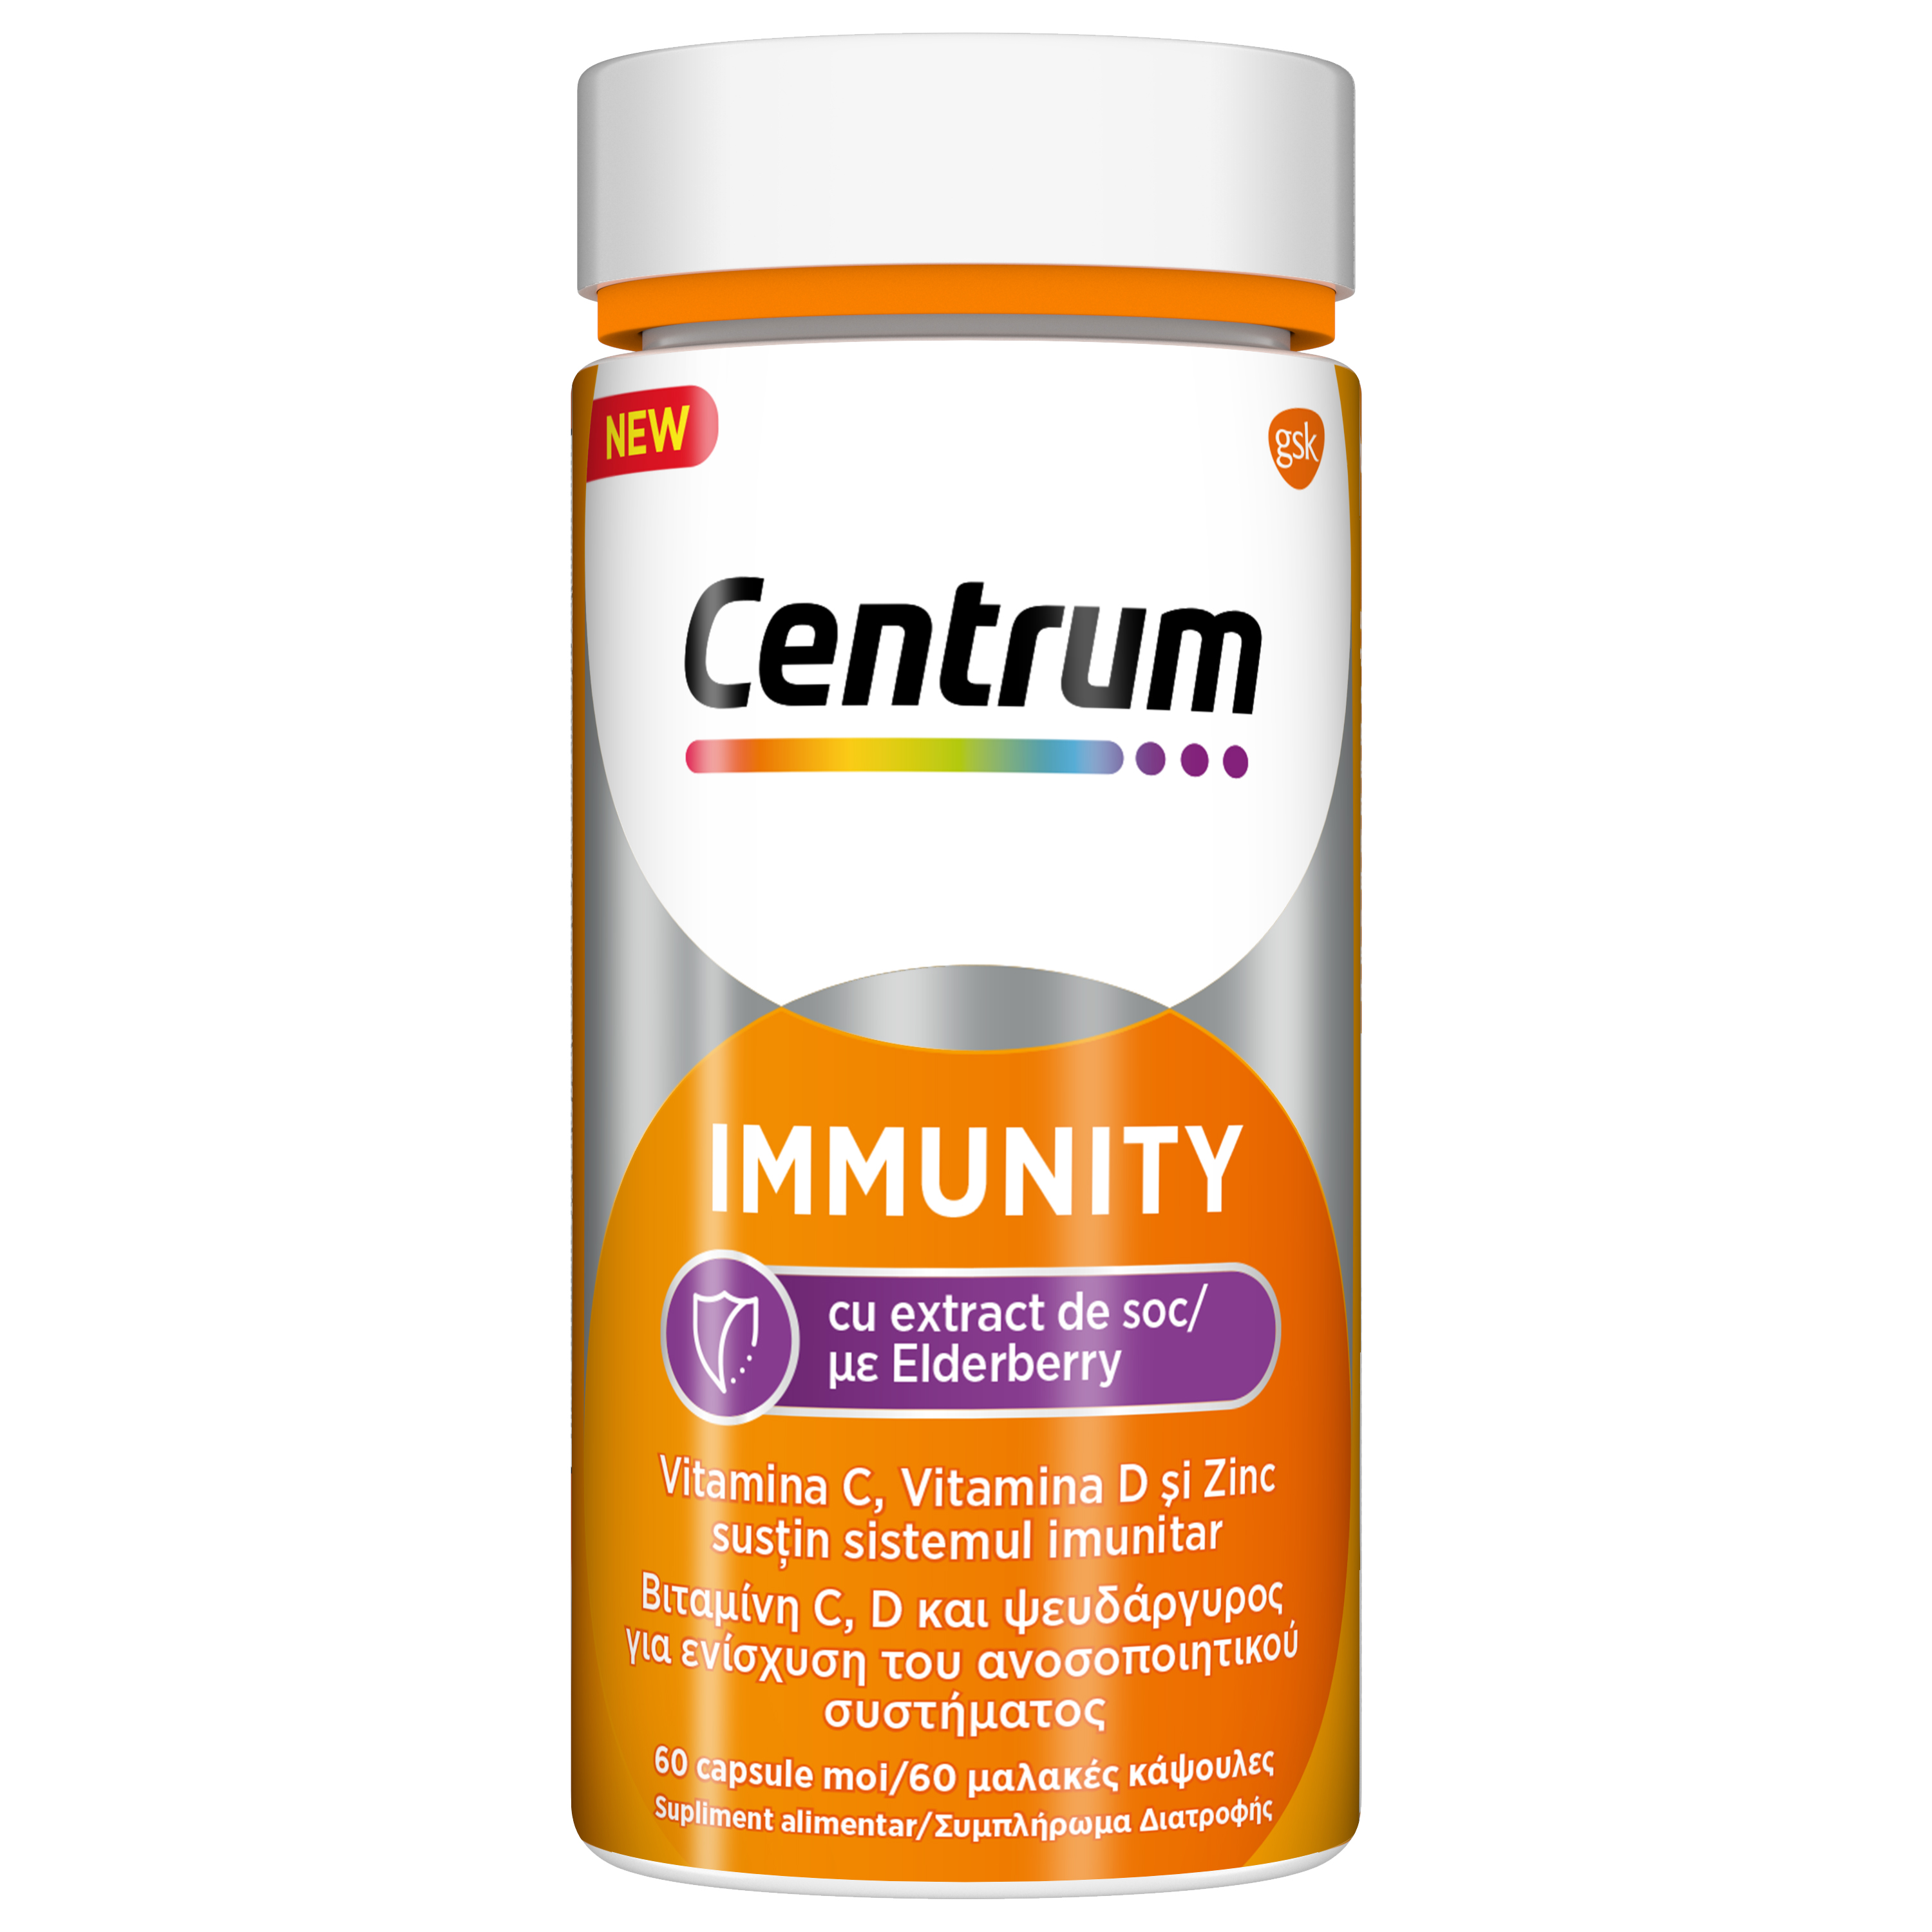 Centrum Immunity cu extract de soc, 60 capsule, GsK